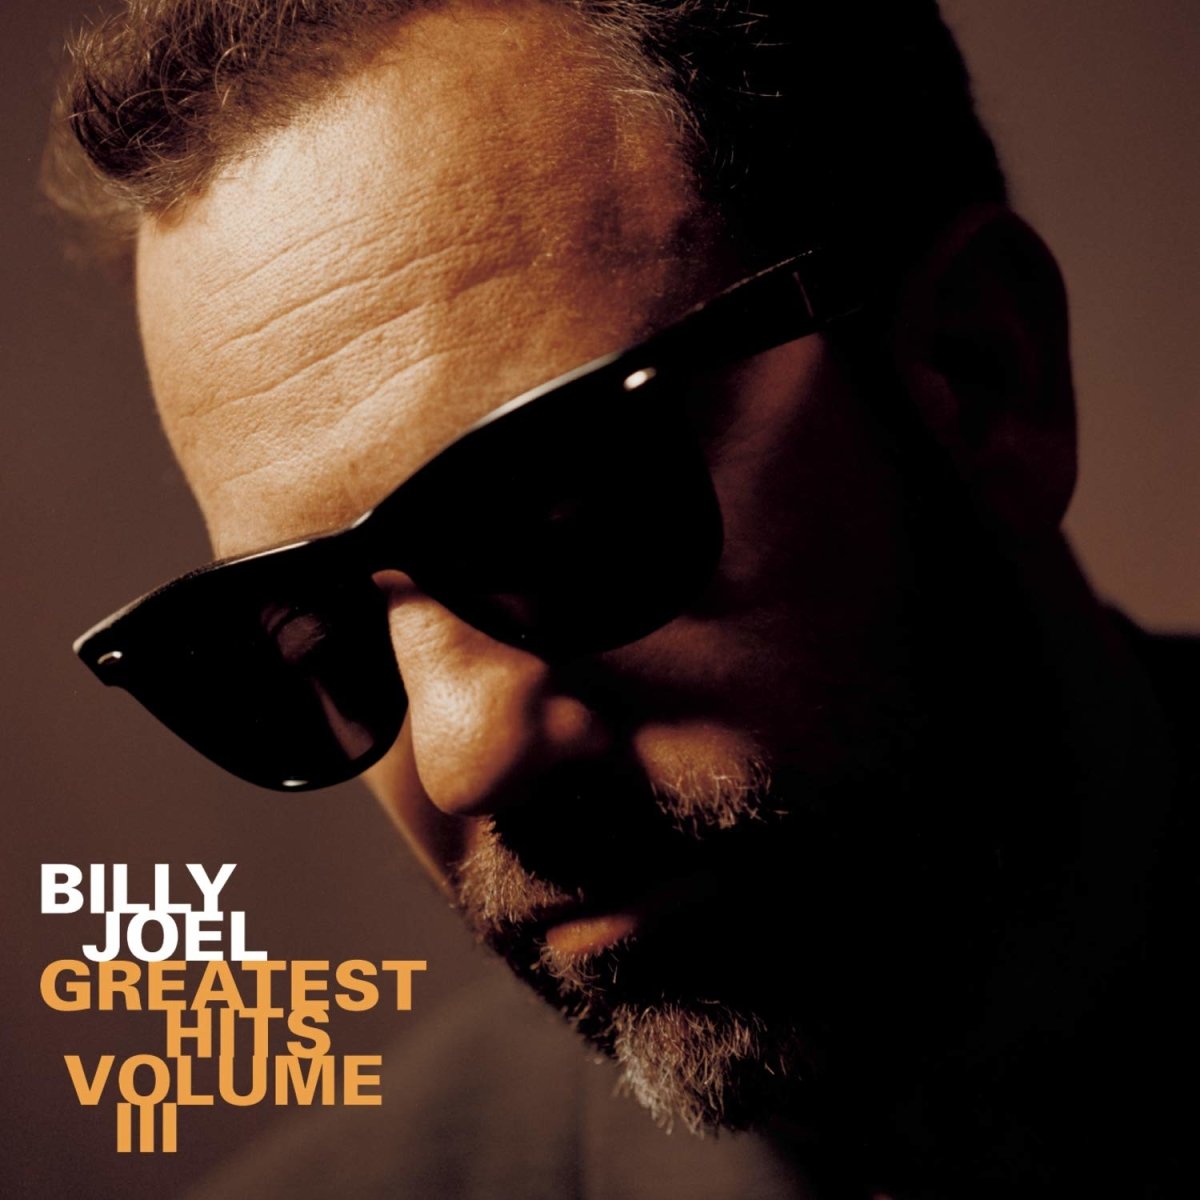 Billy Joel - Greatest Hits Volume III Vinyl